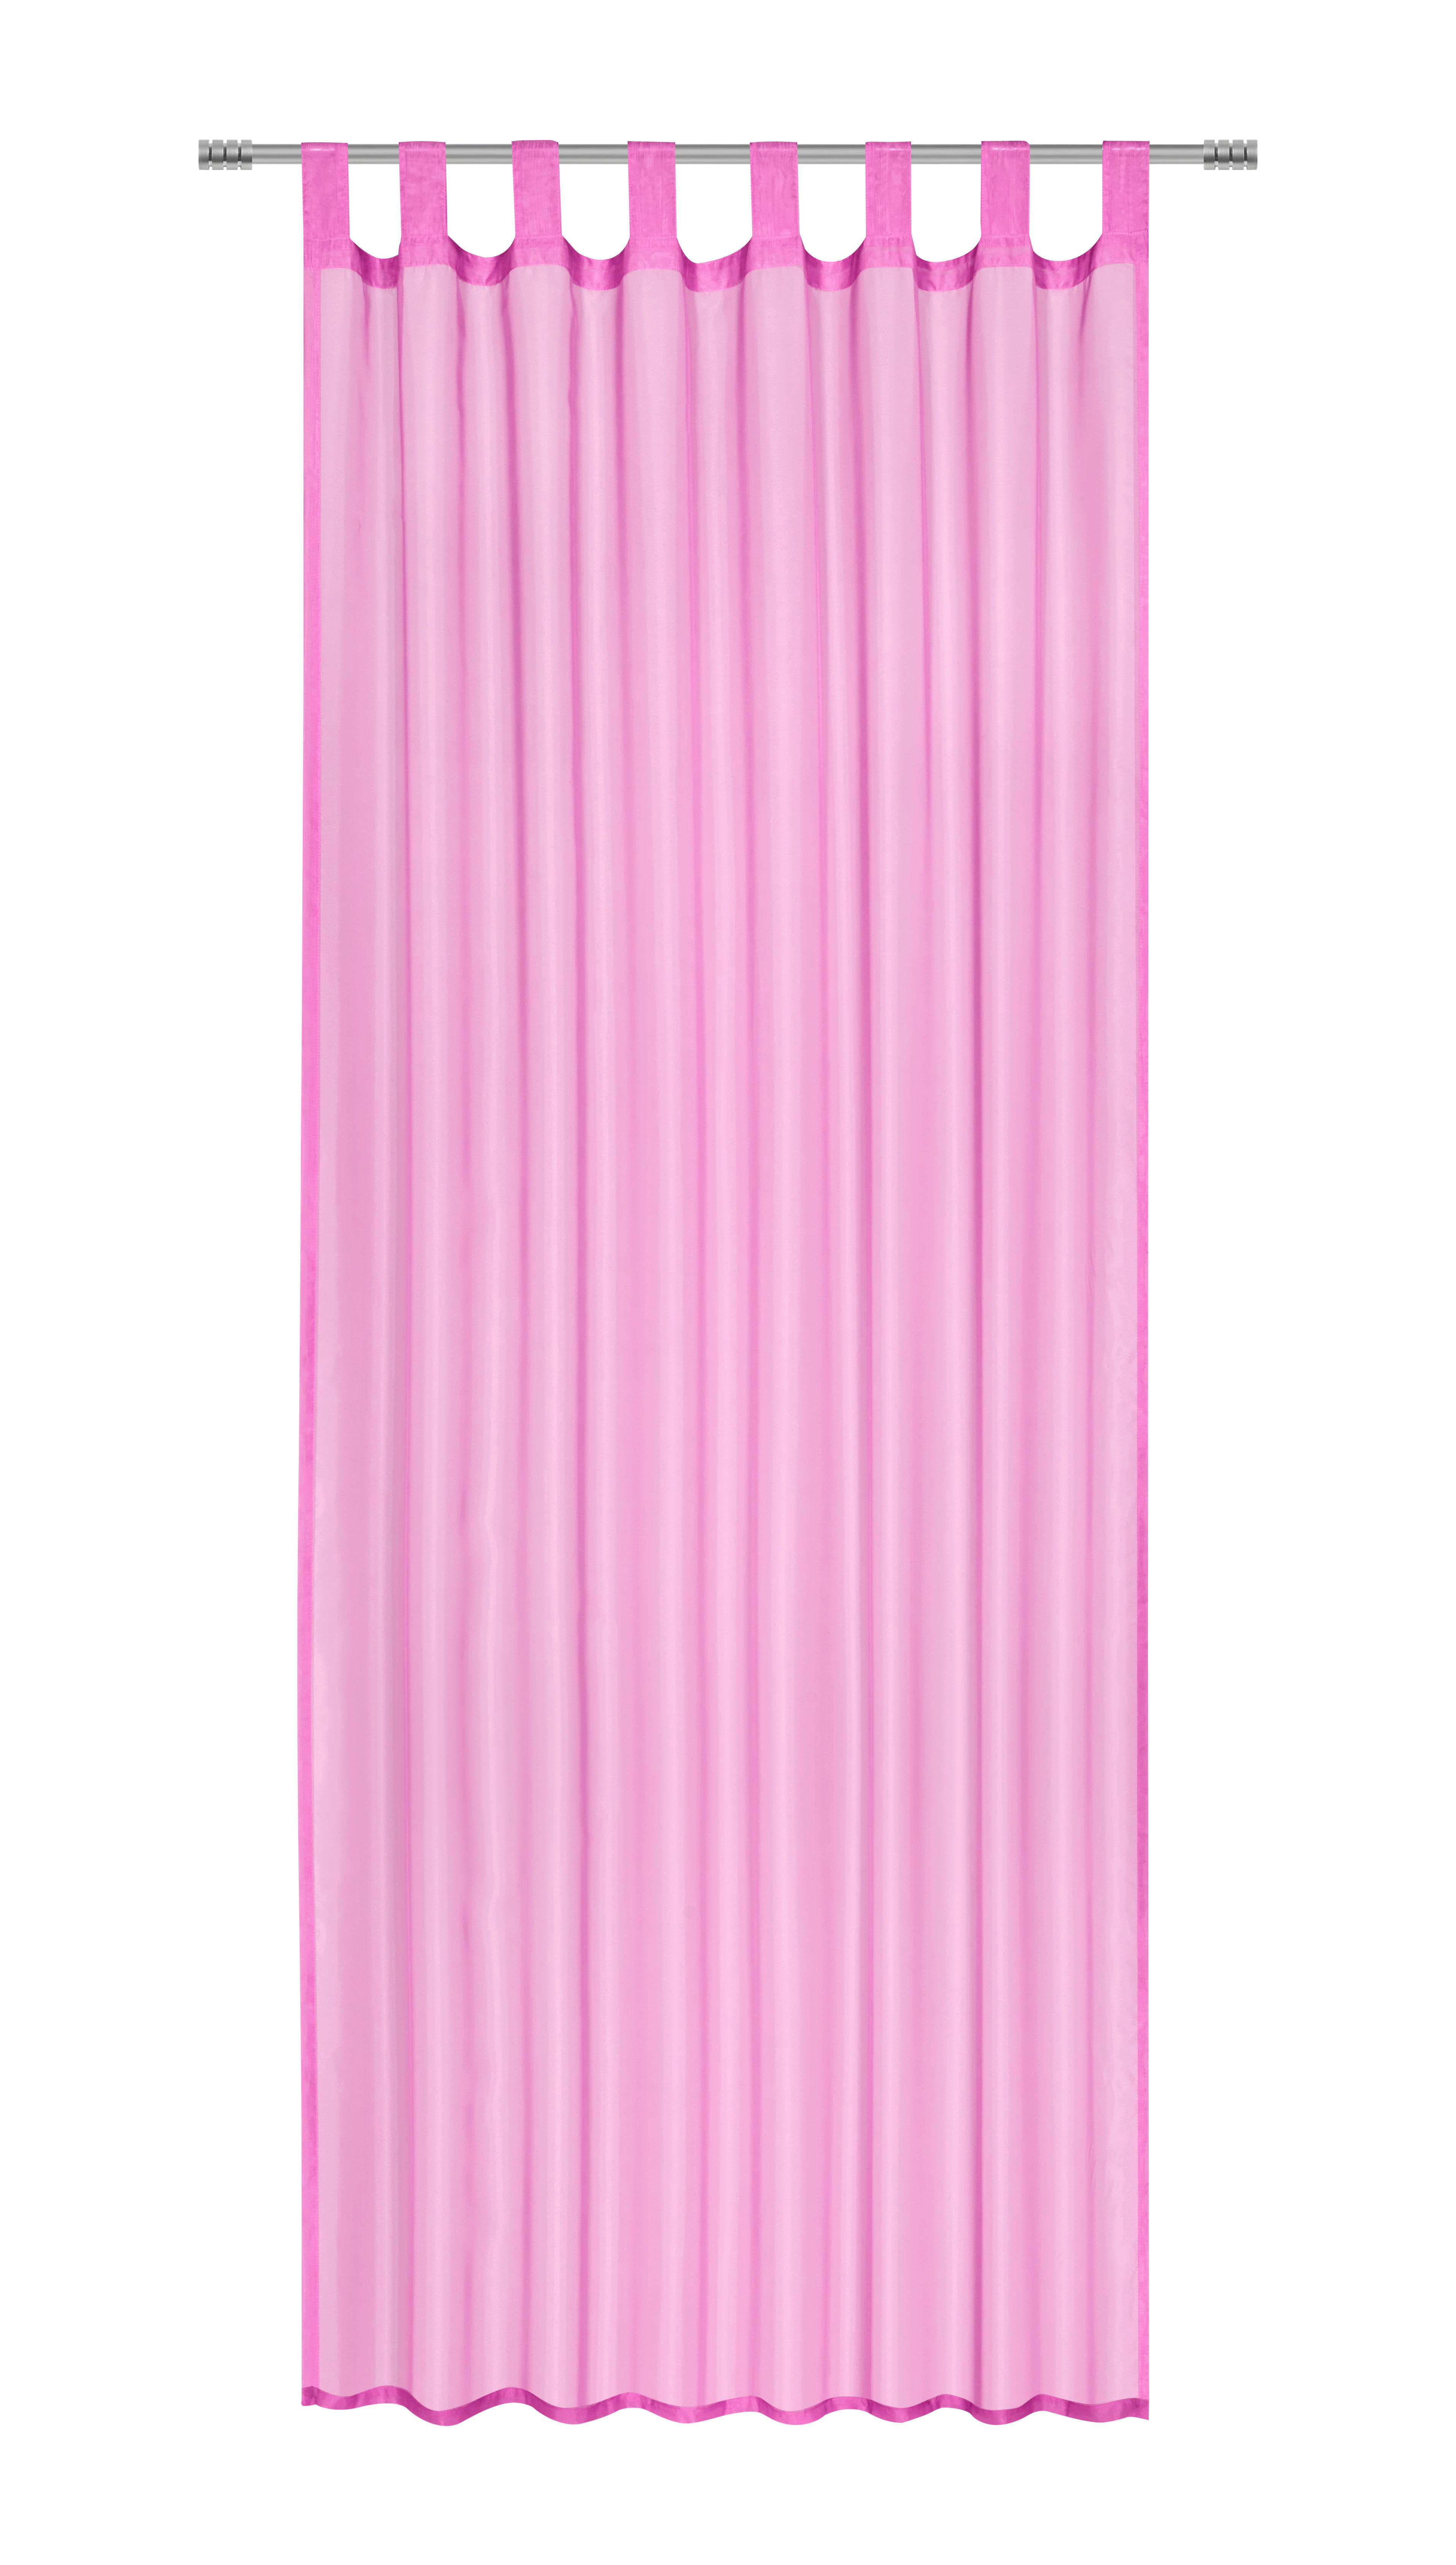 SCHLAUFENVORHANG transparent  - Pink, Basics, Textil (140/245cm) - Boxxx